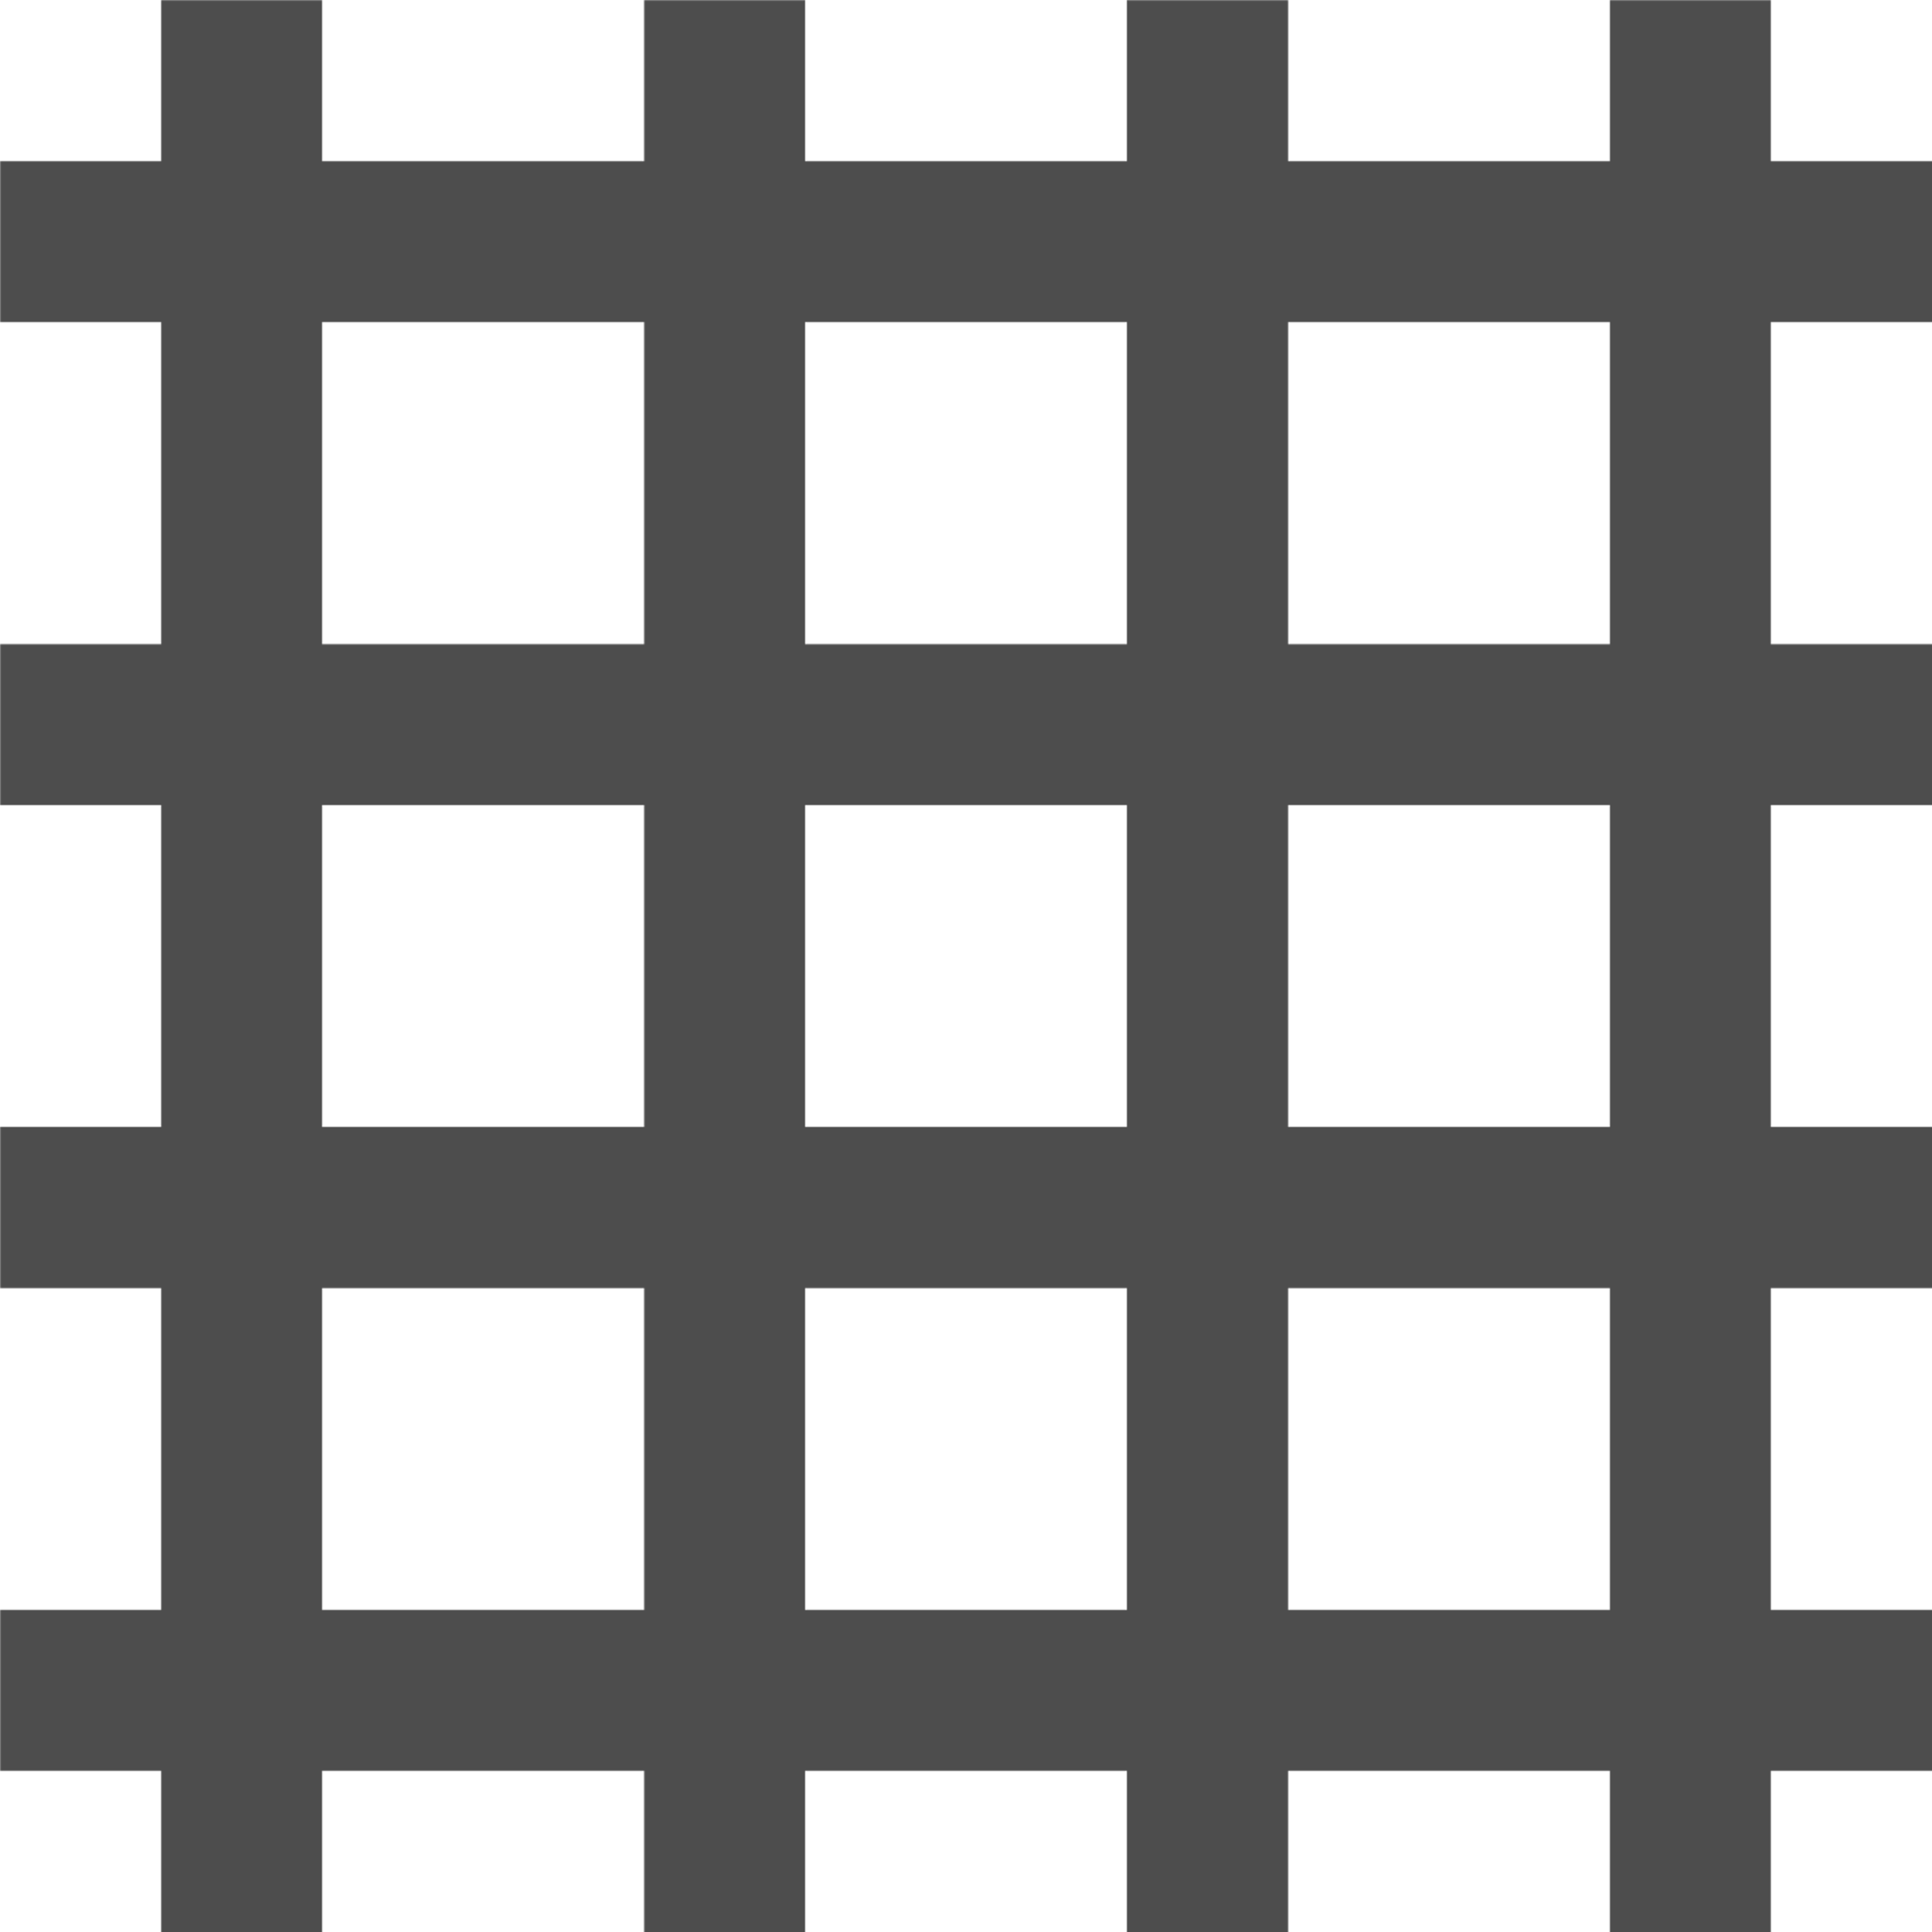 grid rectangular icon